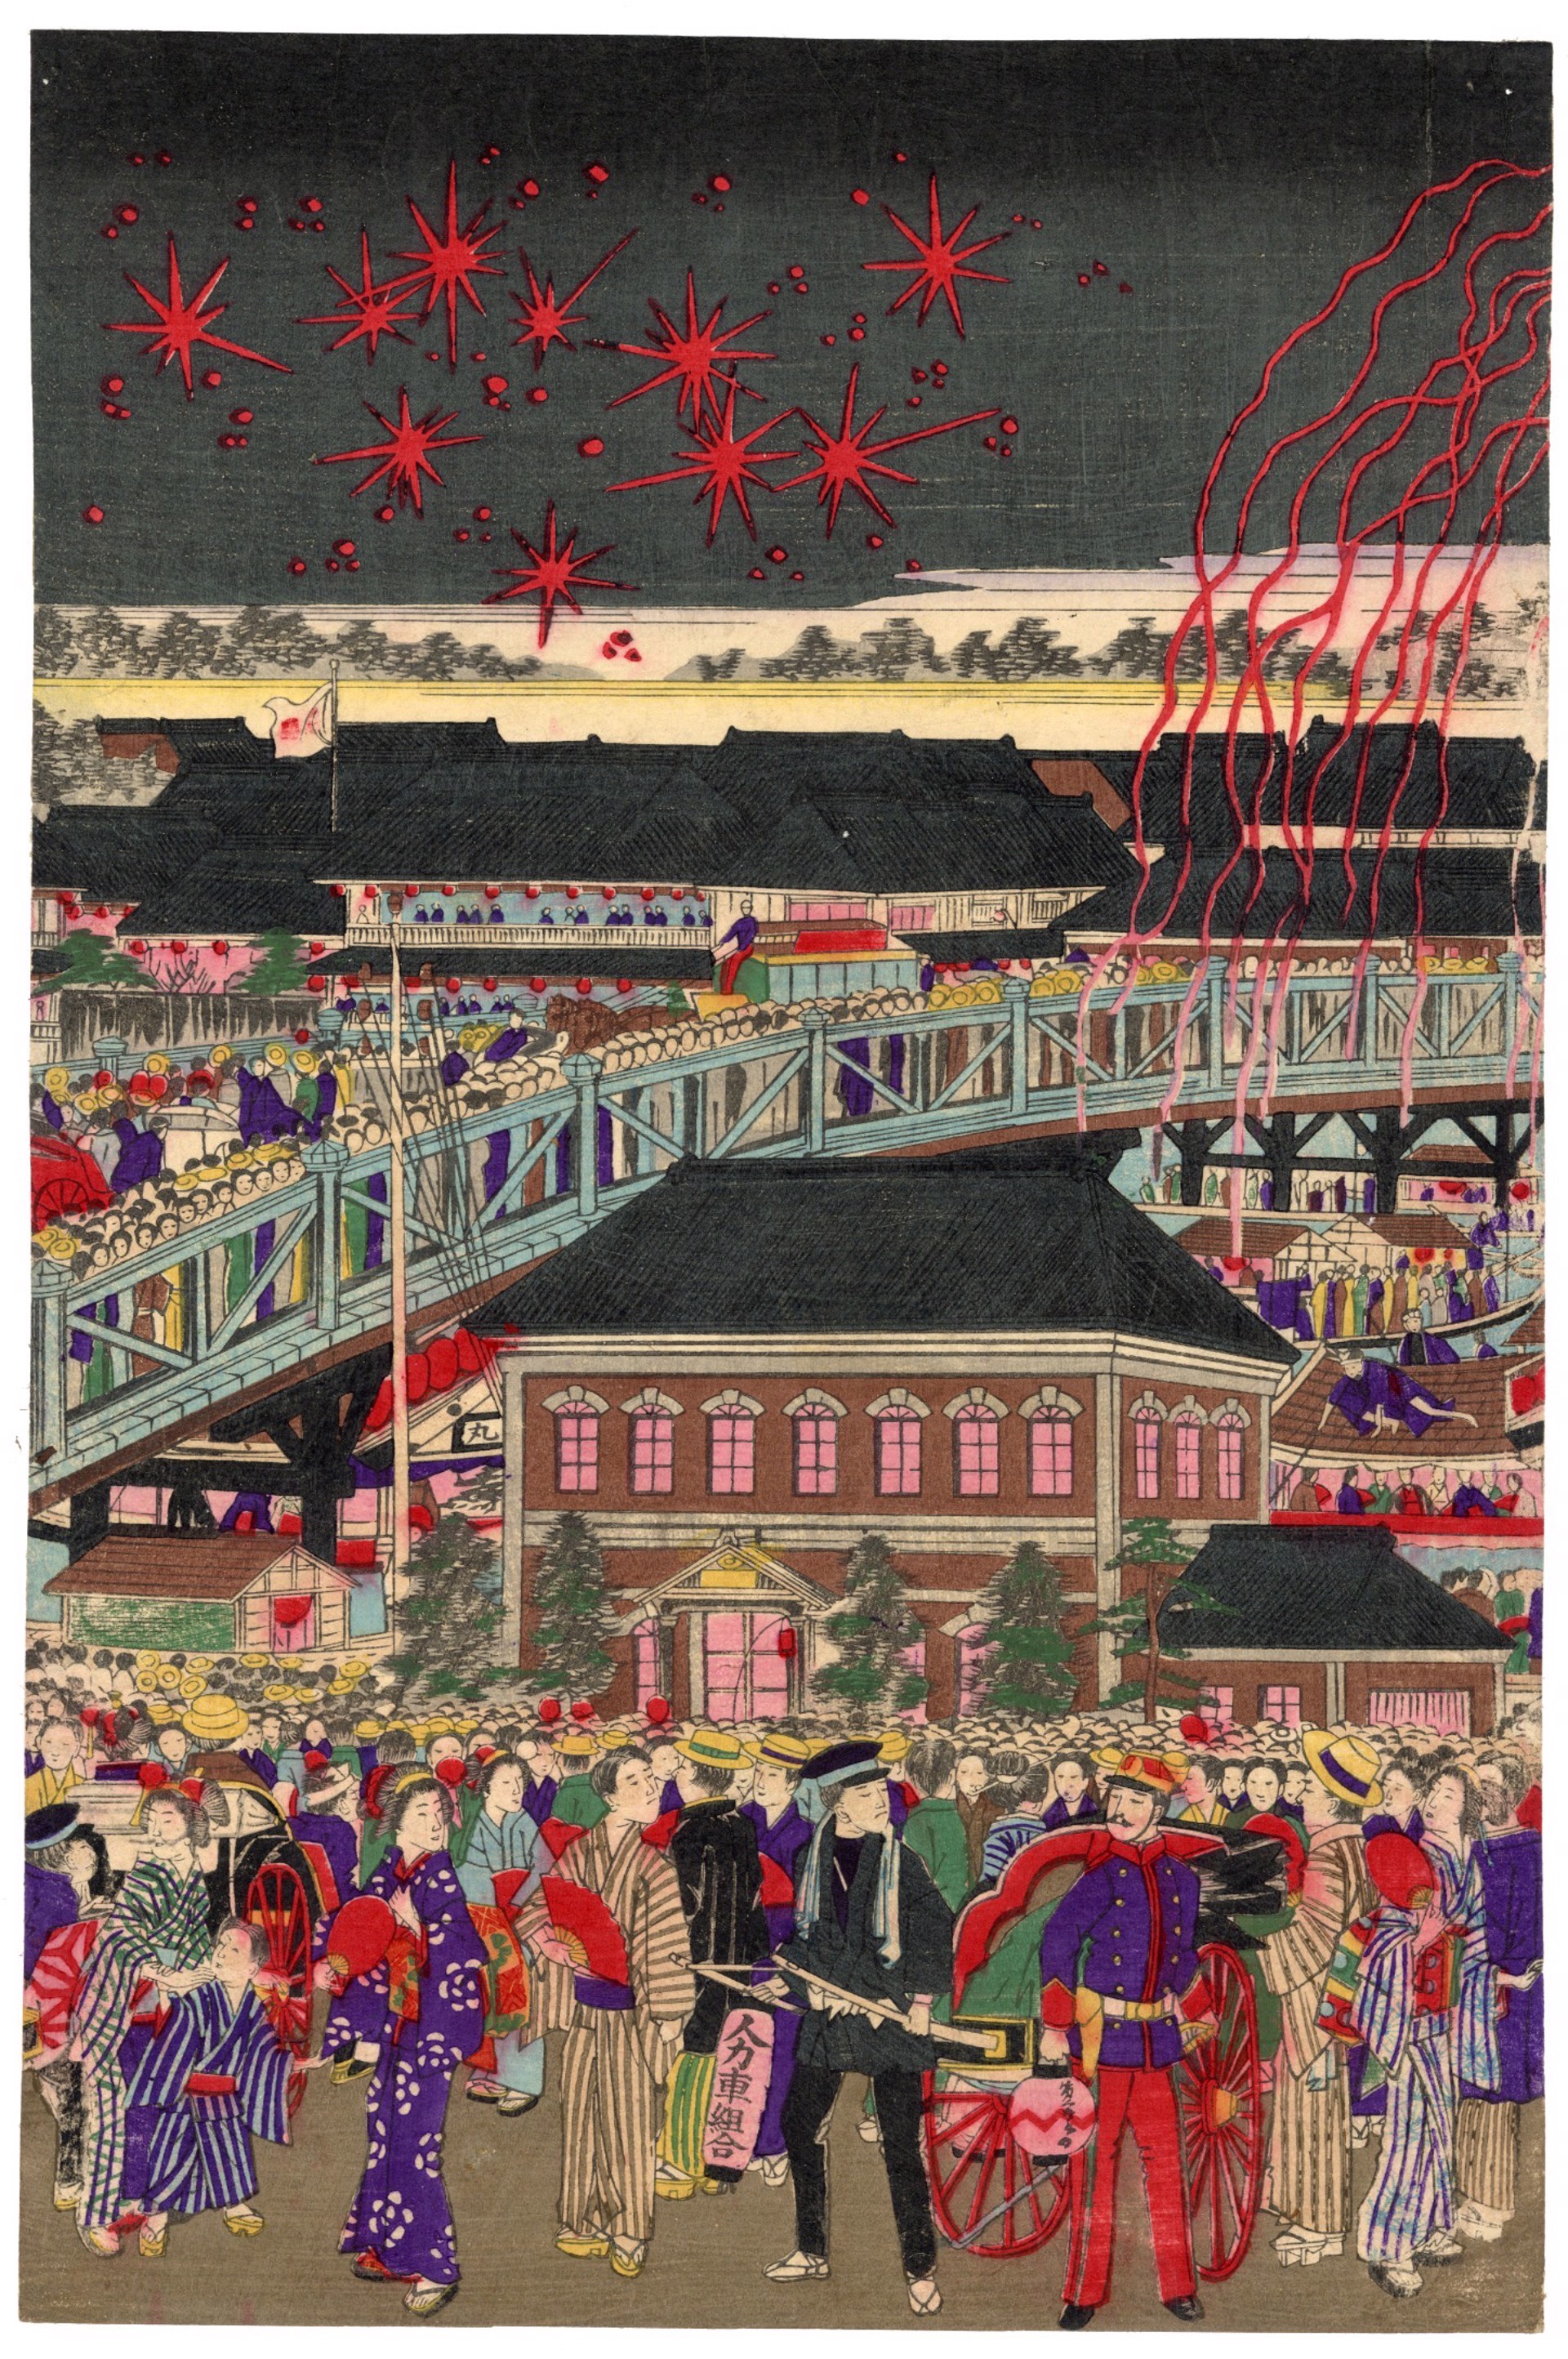 Great Fireworks Display at the Tokyo Ryogoku Bridge River Festival by Shunkyo (act. 1880 - 1900)